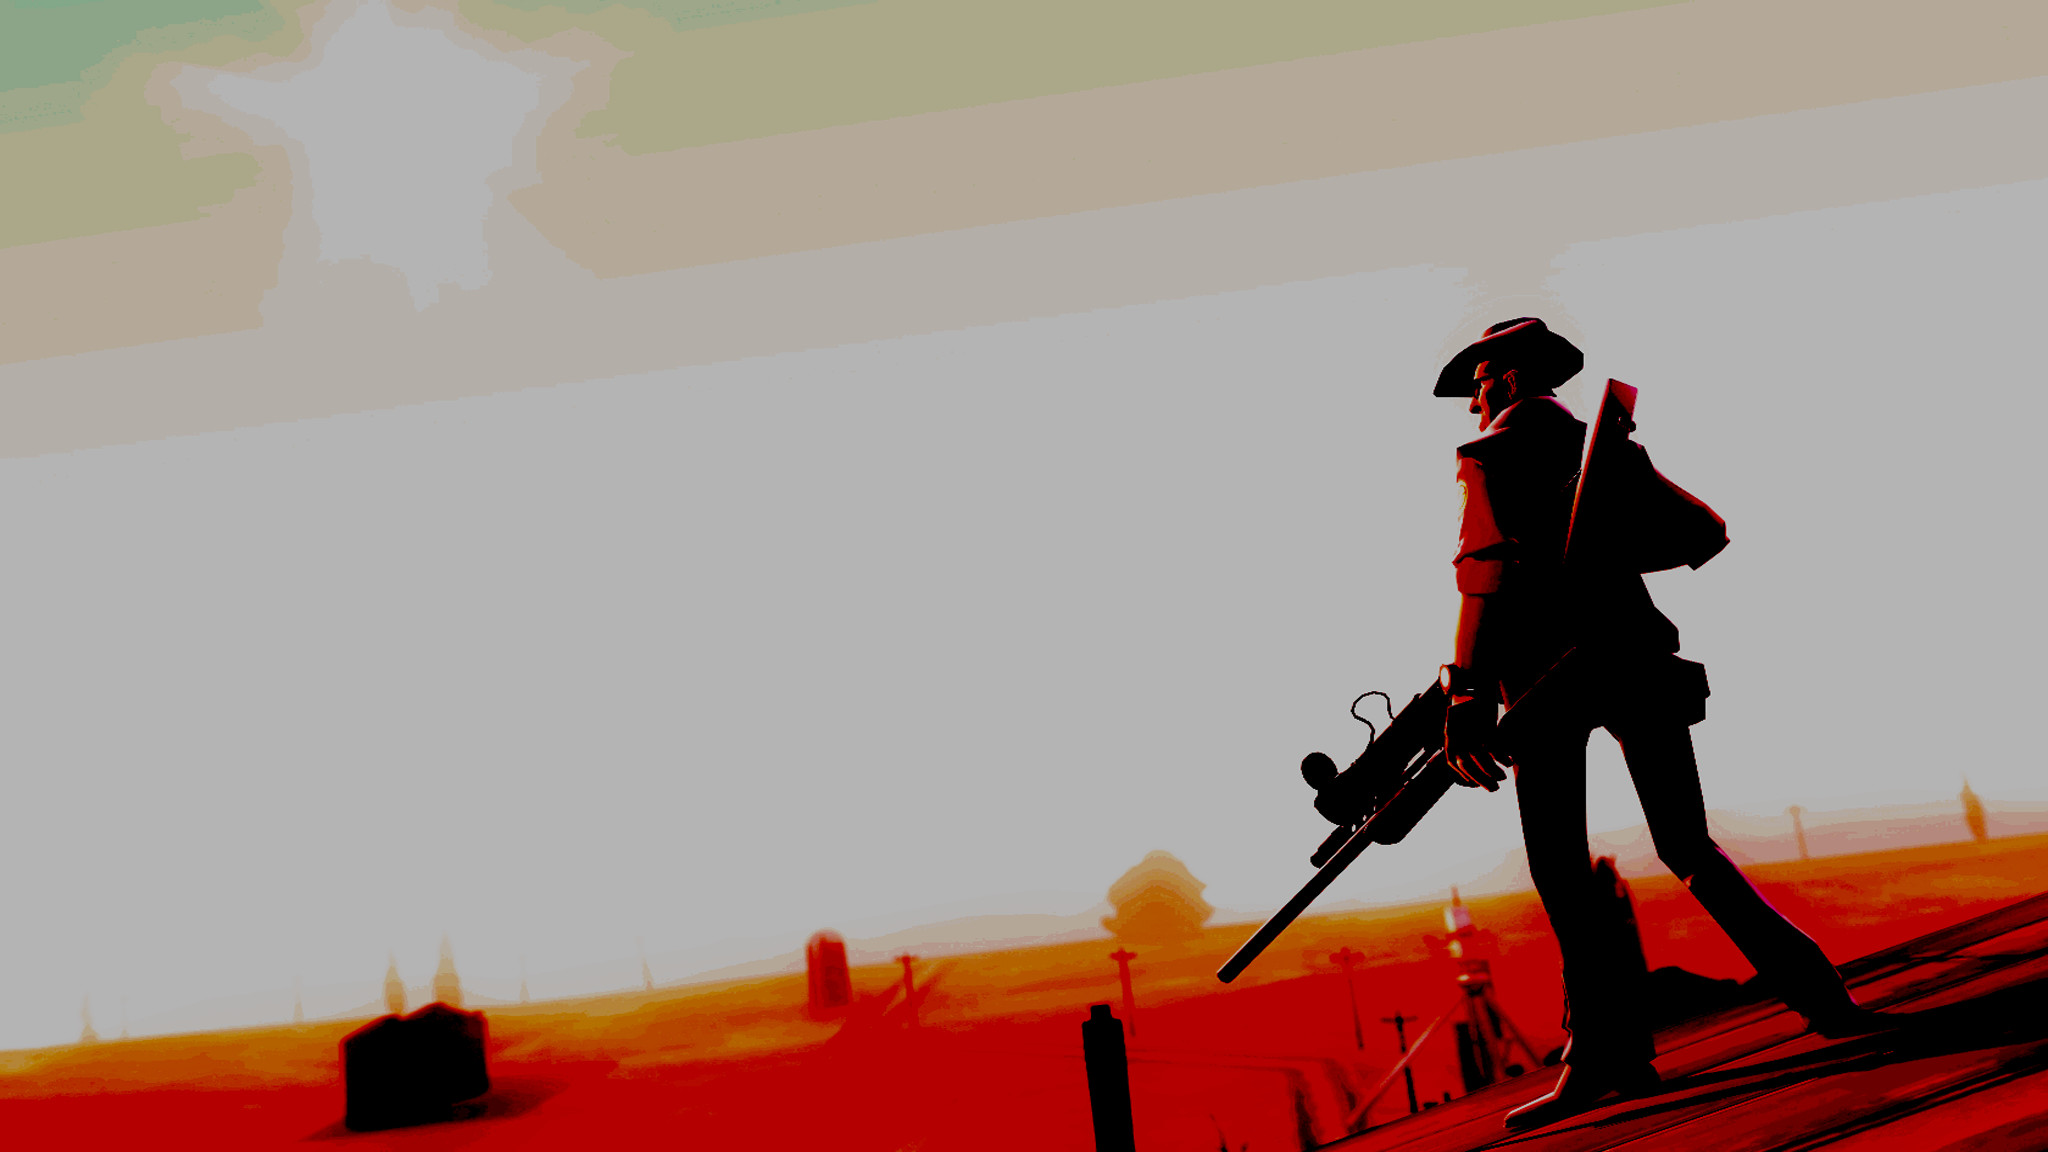 2048x1152 ... Team Fortress 2 - Sniper Wallpaper by LostHeartJar